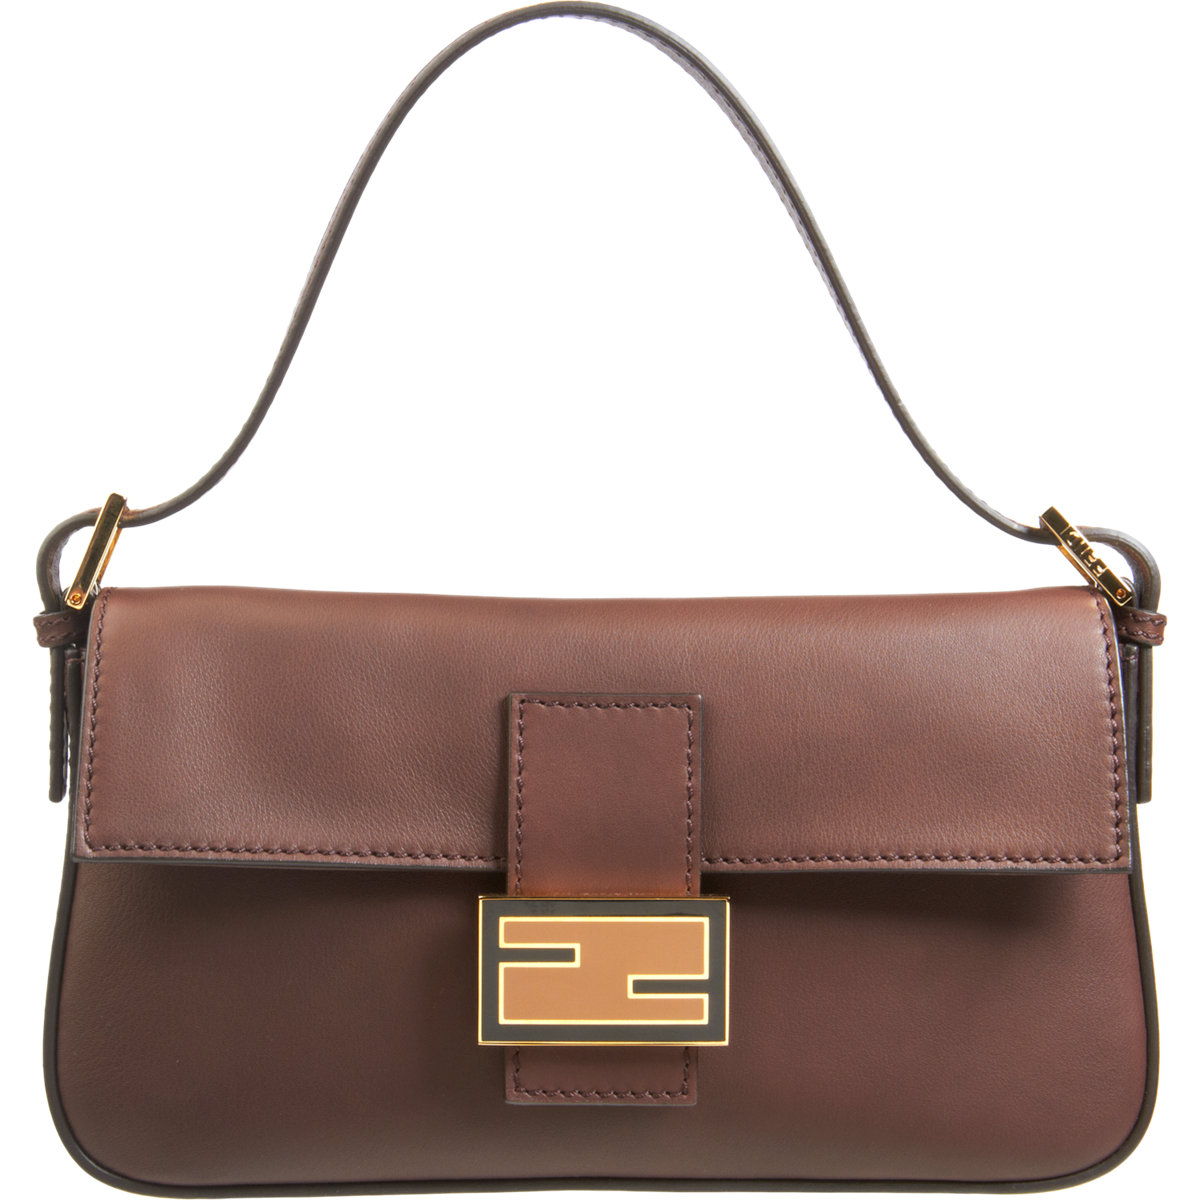 Baguette Handbag. BIG SALE - Canvas Tote Bag / Shoulder Handbags for Women - SouvNear Handmade ...